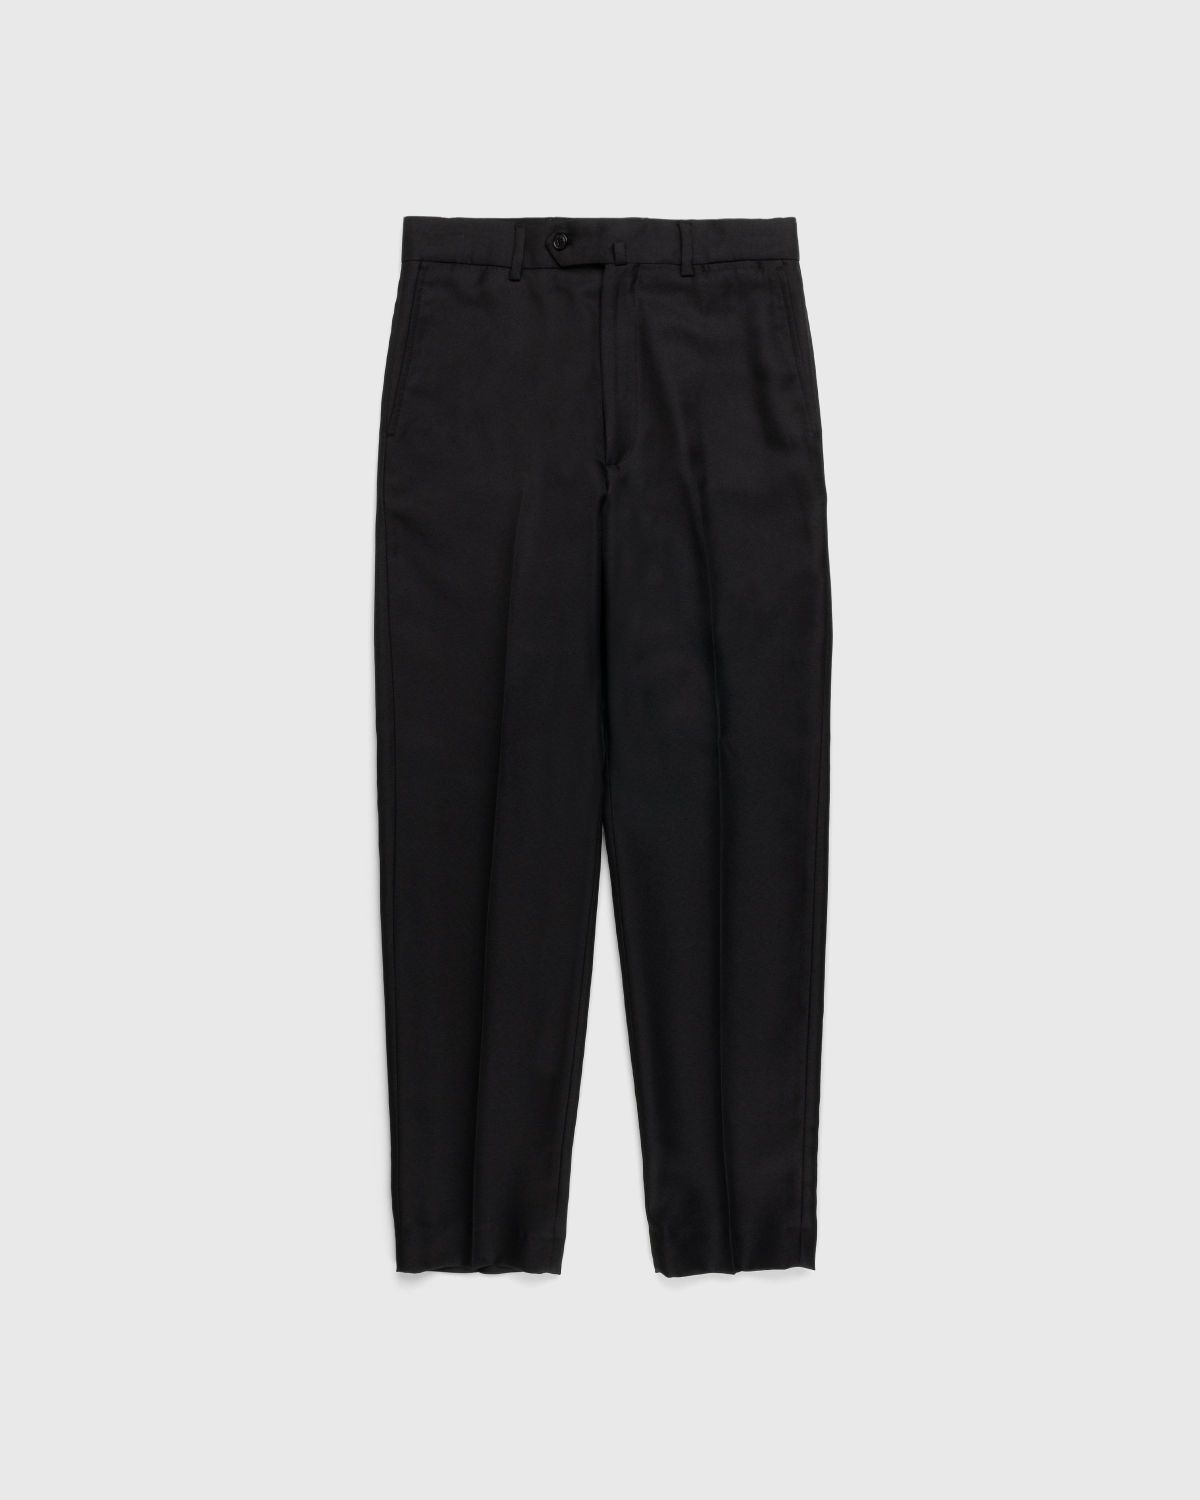 Kenzo – Slim-Fit Trousers Black - Trousers - Black - Image 1